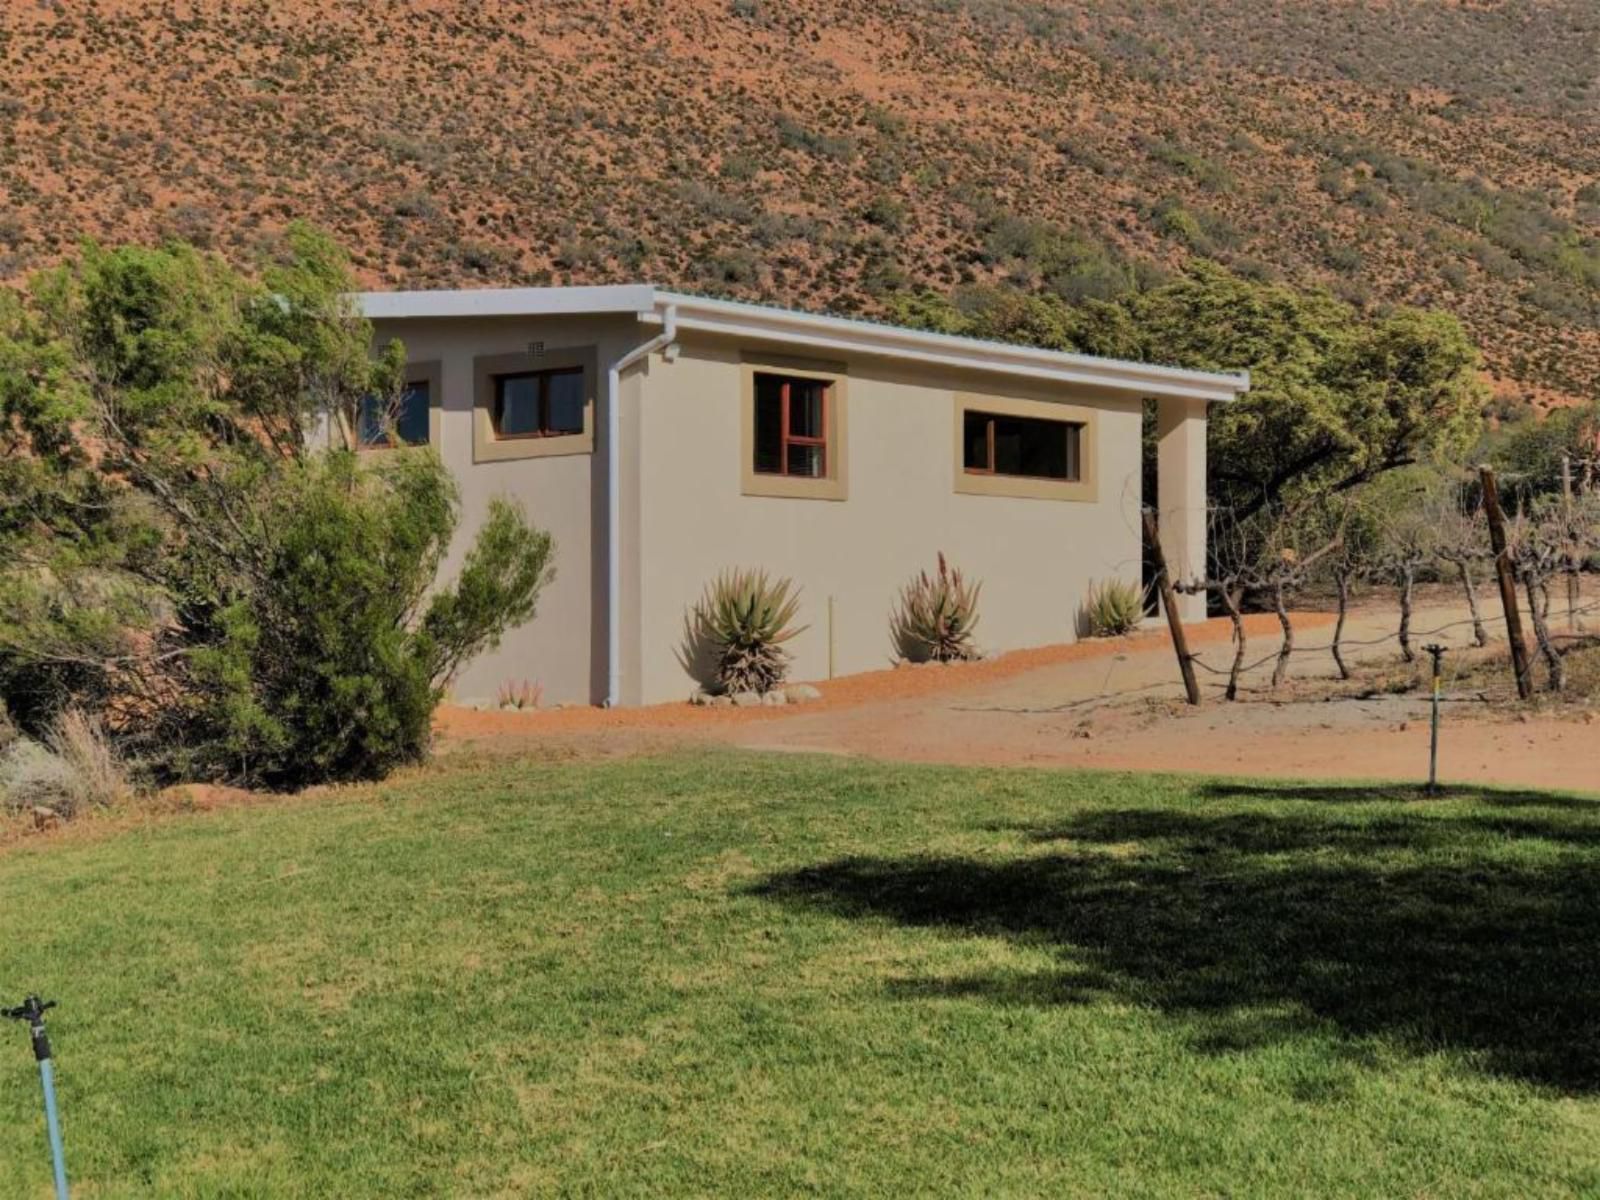 Oaksrest Vineyards Guest Farm Ladismith Western Cape South Africa House, Building, Architecture, Desert, Nature, Sand